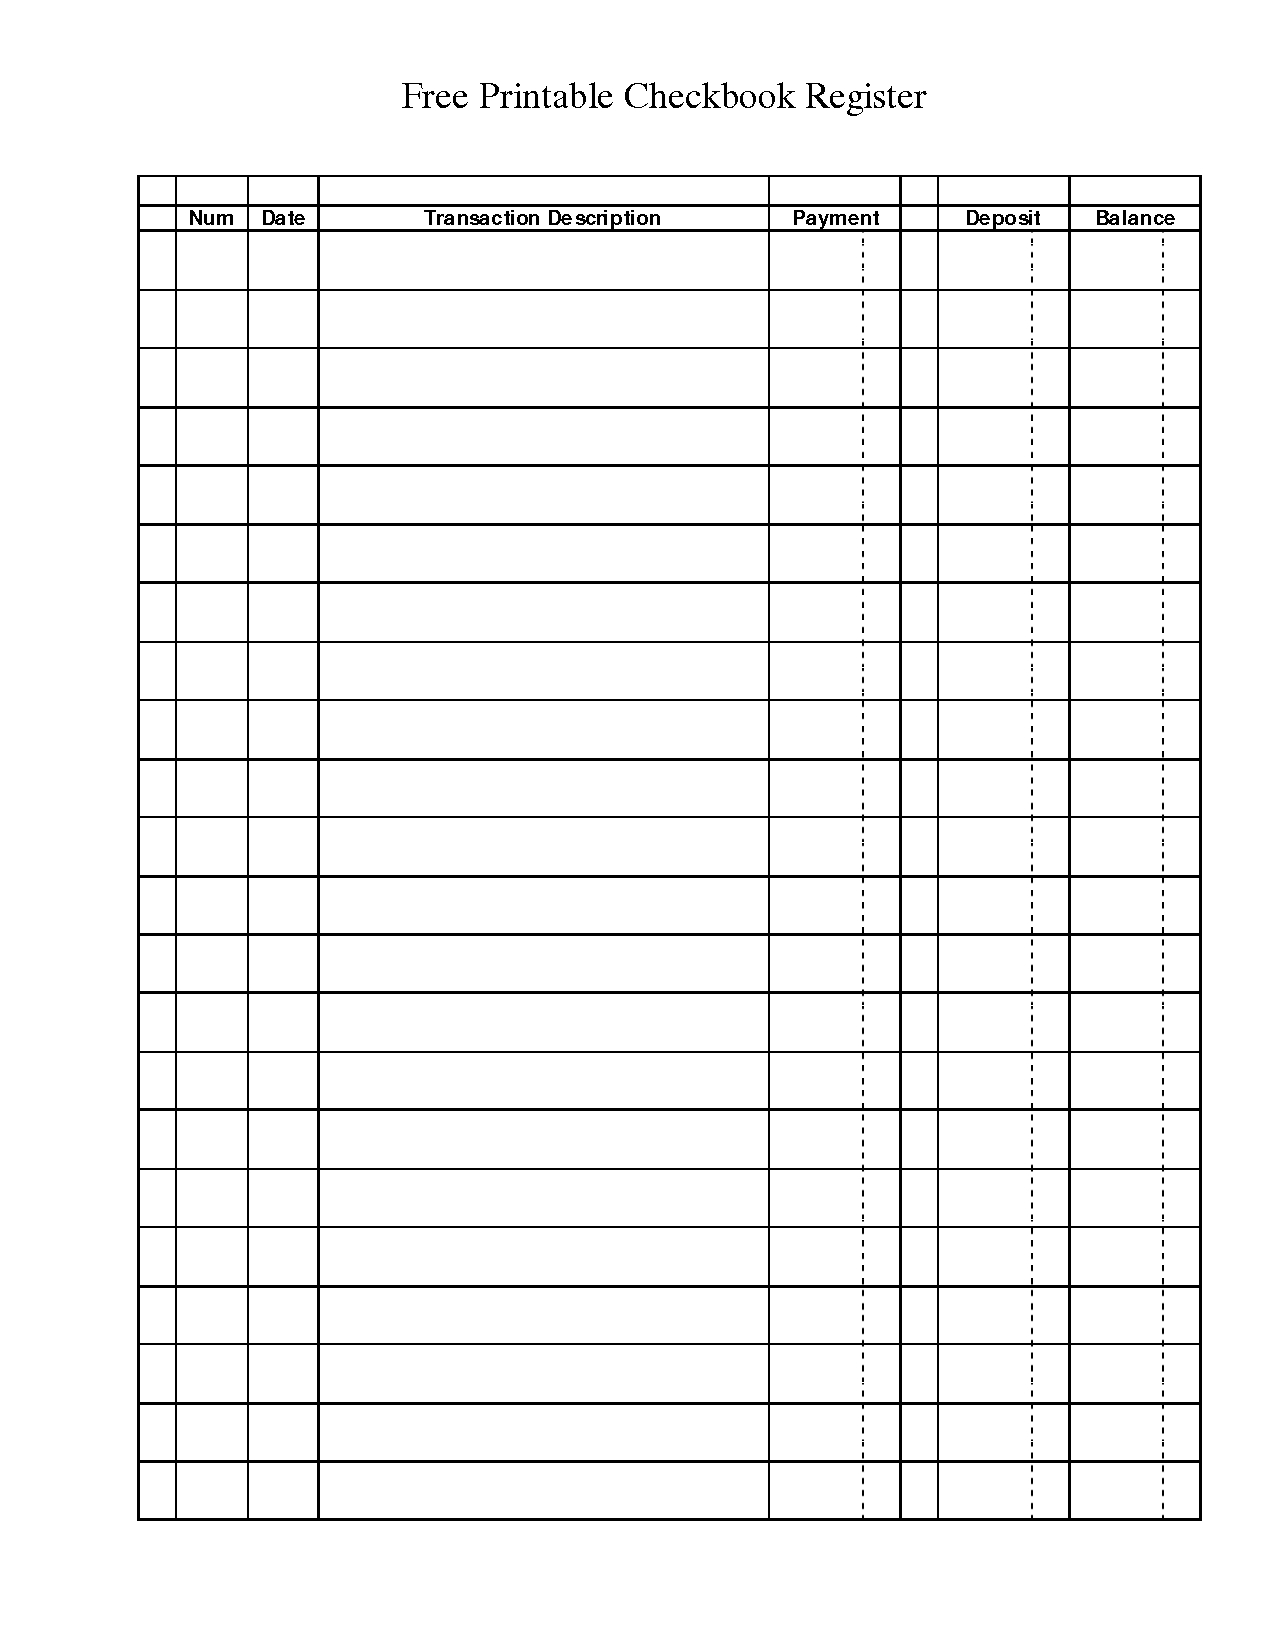 Free Printable Template Chores | Free Printable Check Register - Free Printable Check Register With Running Balance